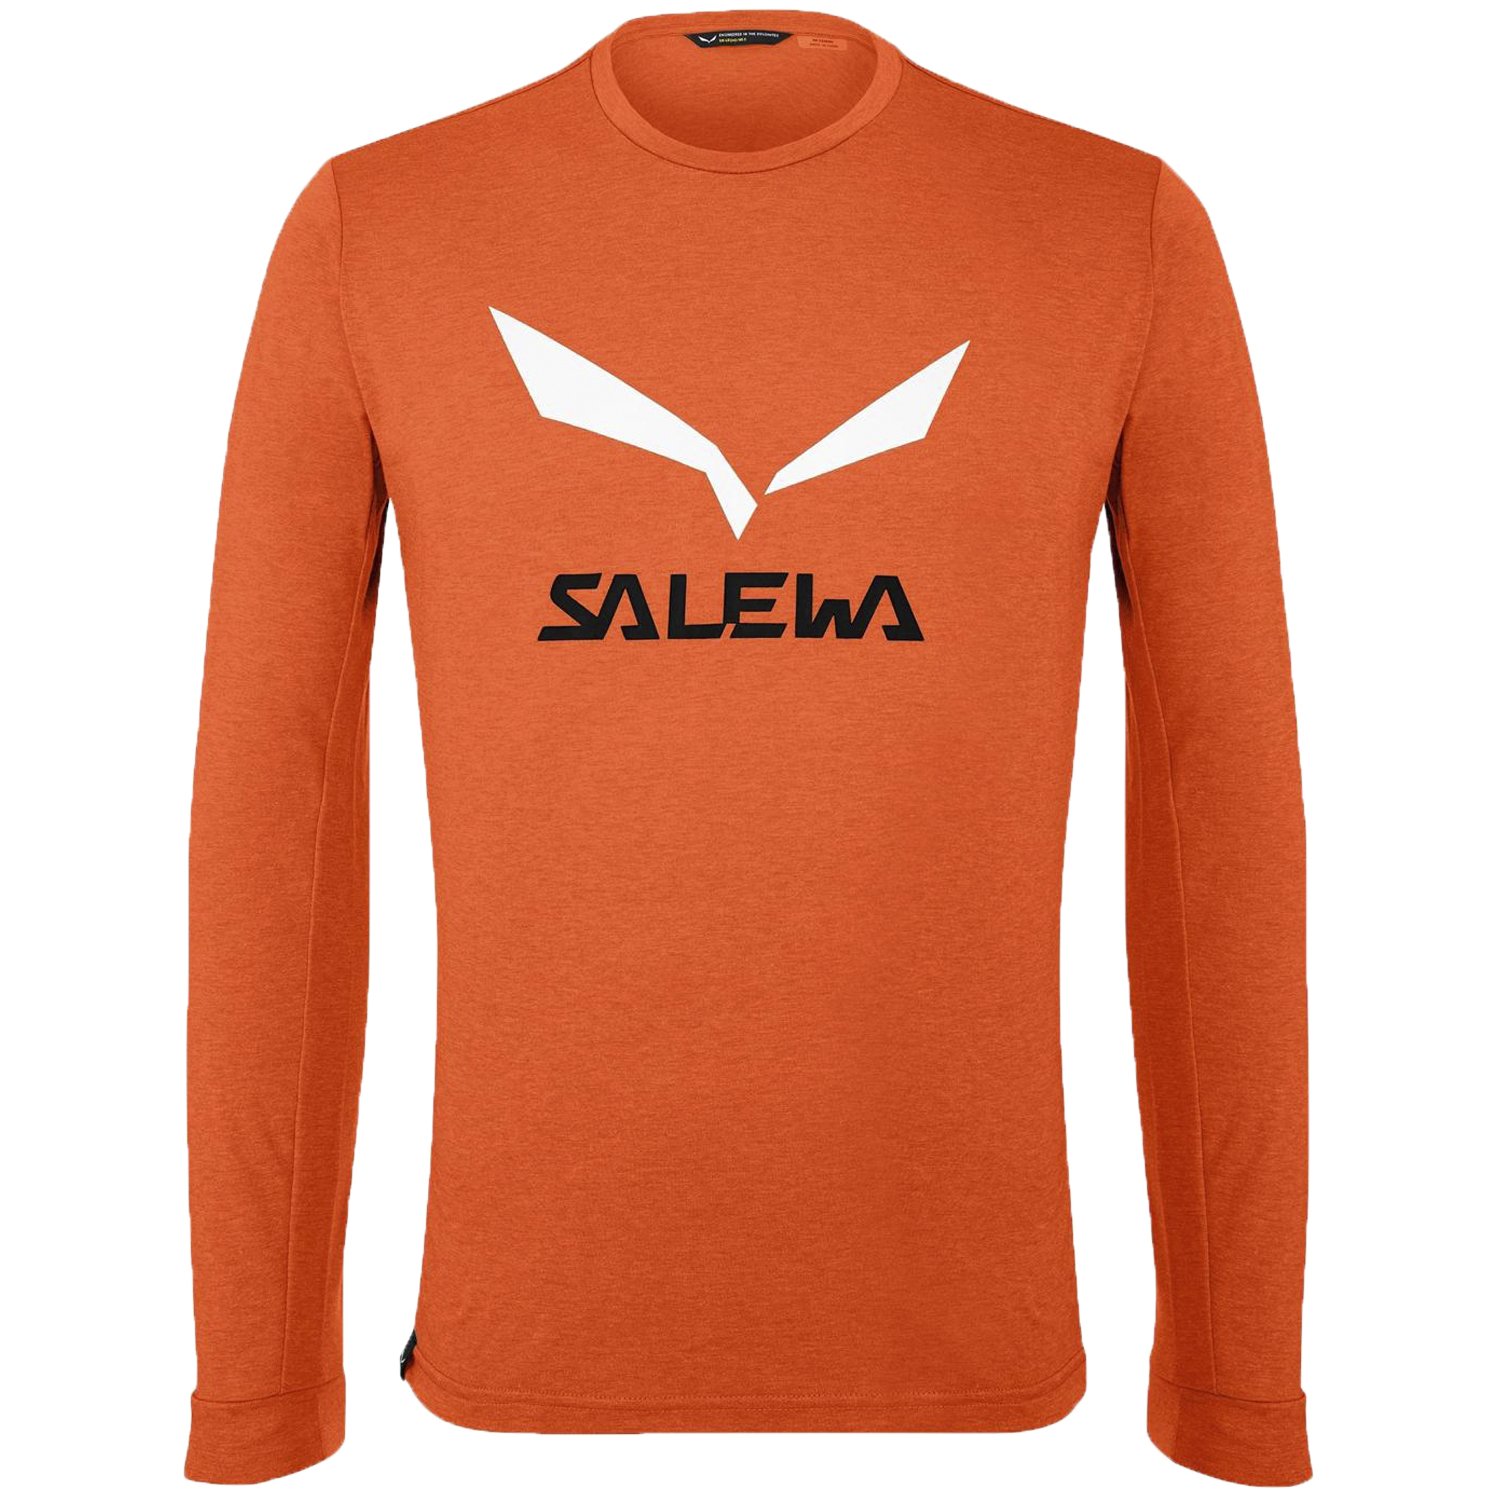 Футболка Salewa Solidlogo Dry Men's L/S Tee Red Orange Melange, с длинным рукавом, мужская, 00-0000027340_4156 mjolk футболка с длинным рукавом лягушки